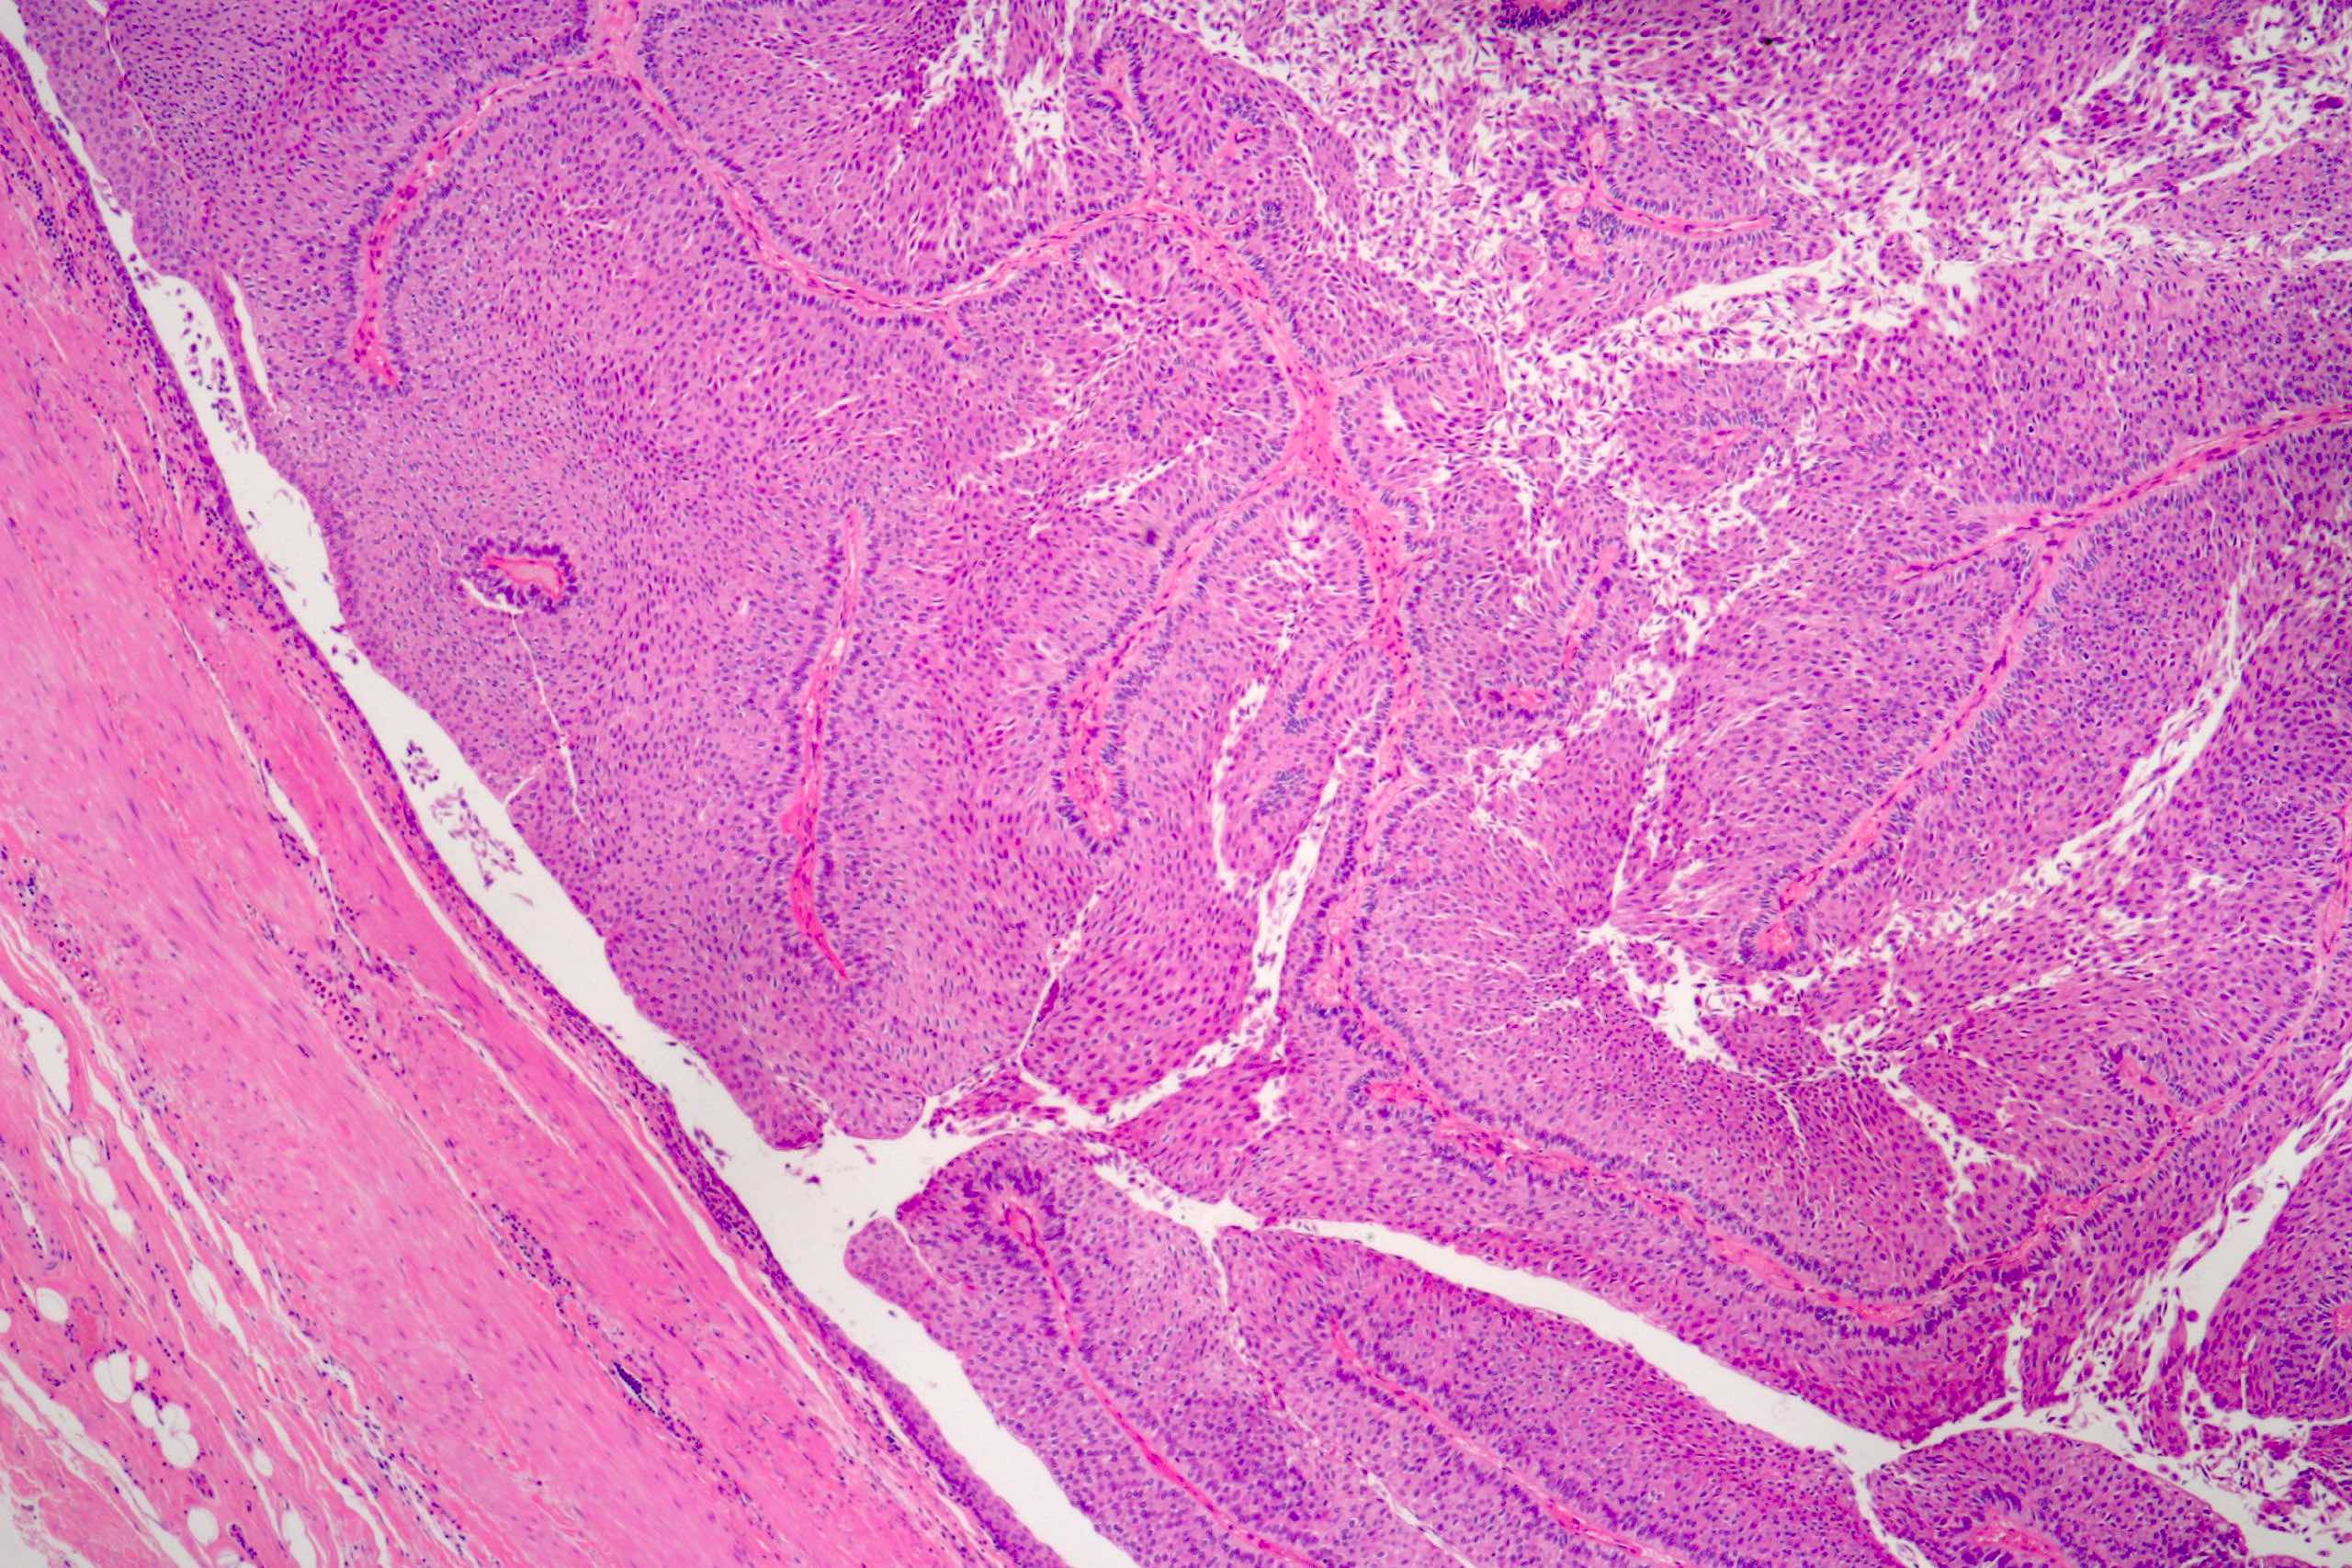 Exophytic intraluminal urothelial papillary neoplasm